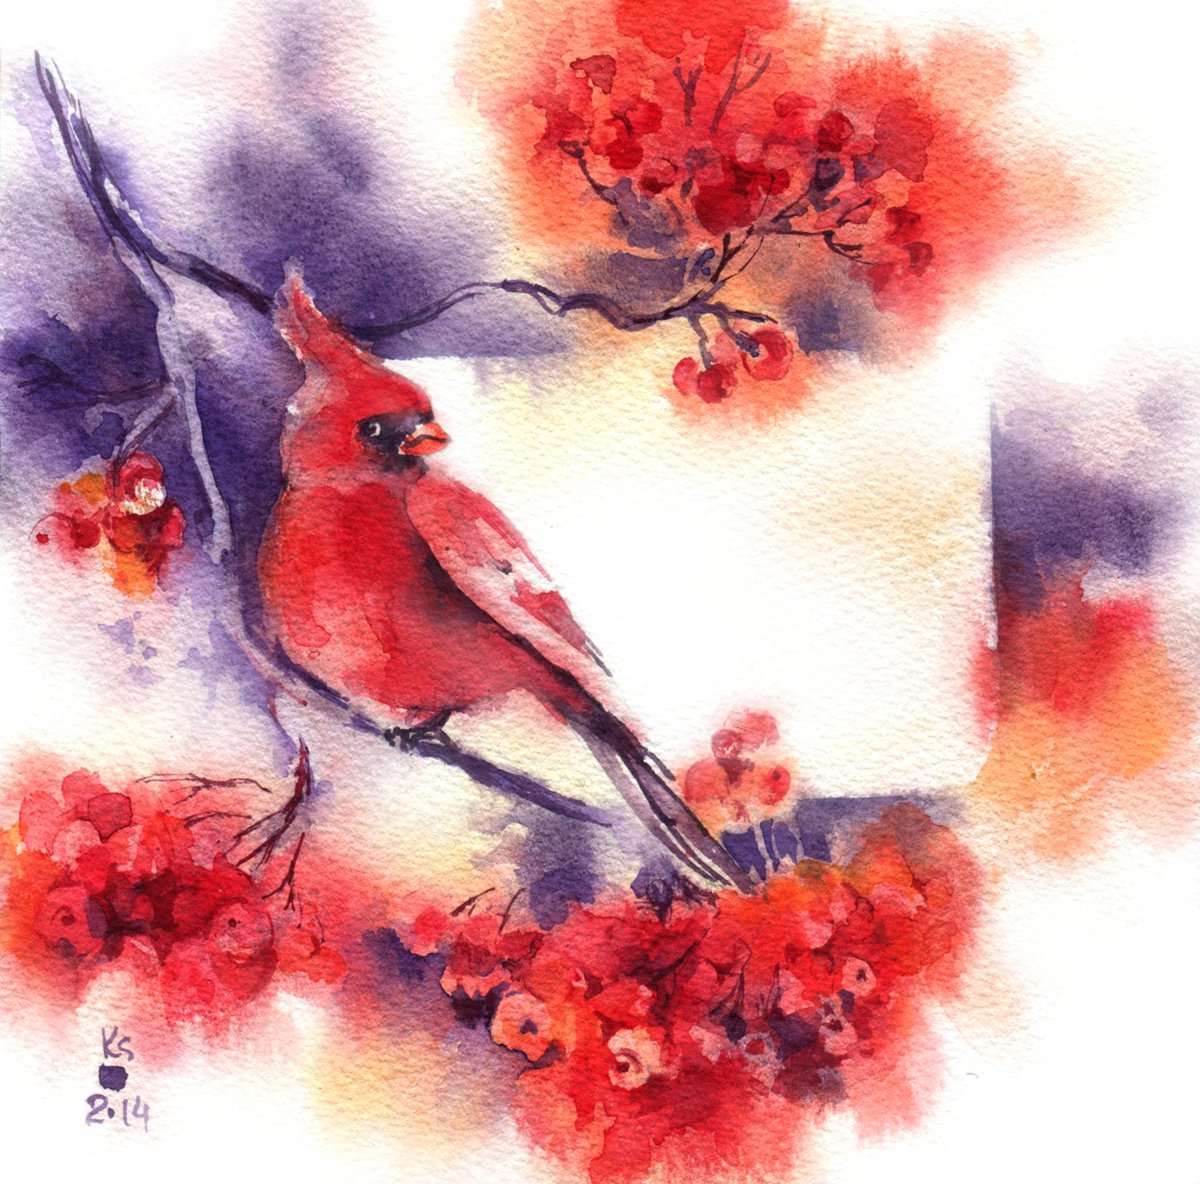 New year card with rowan and cardinal bird original watercolor artwork small format by Ksenia Selianko